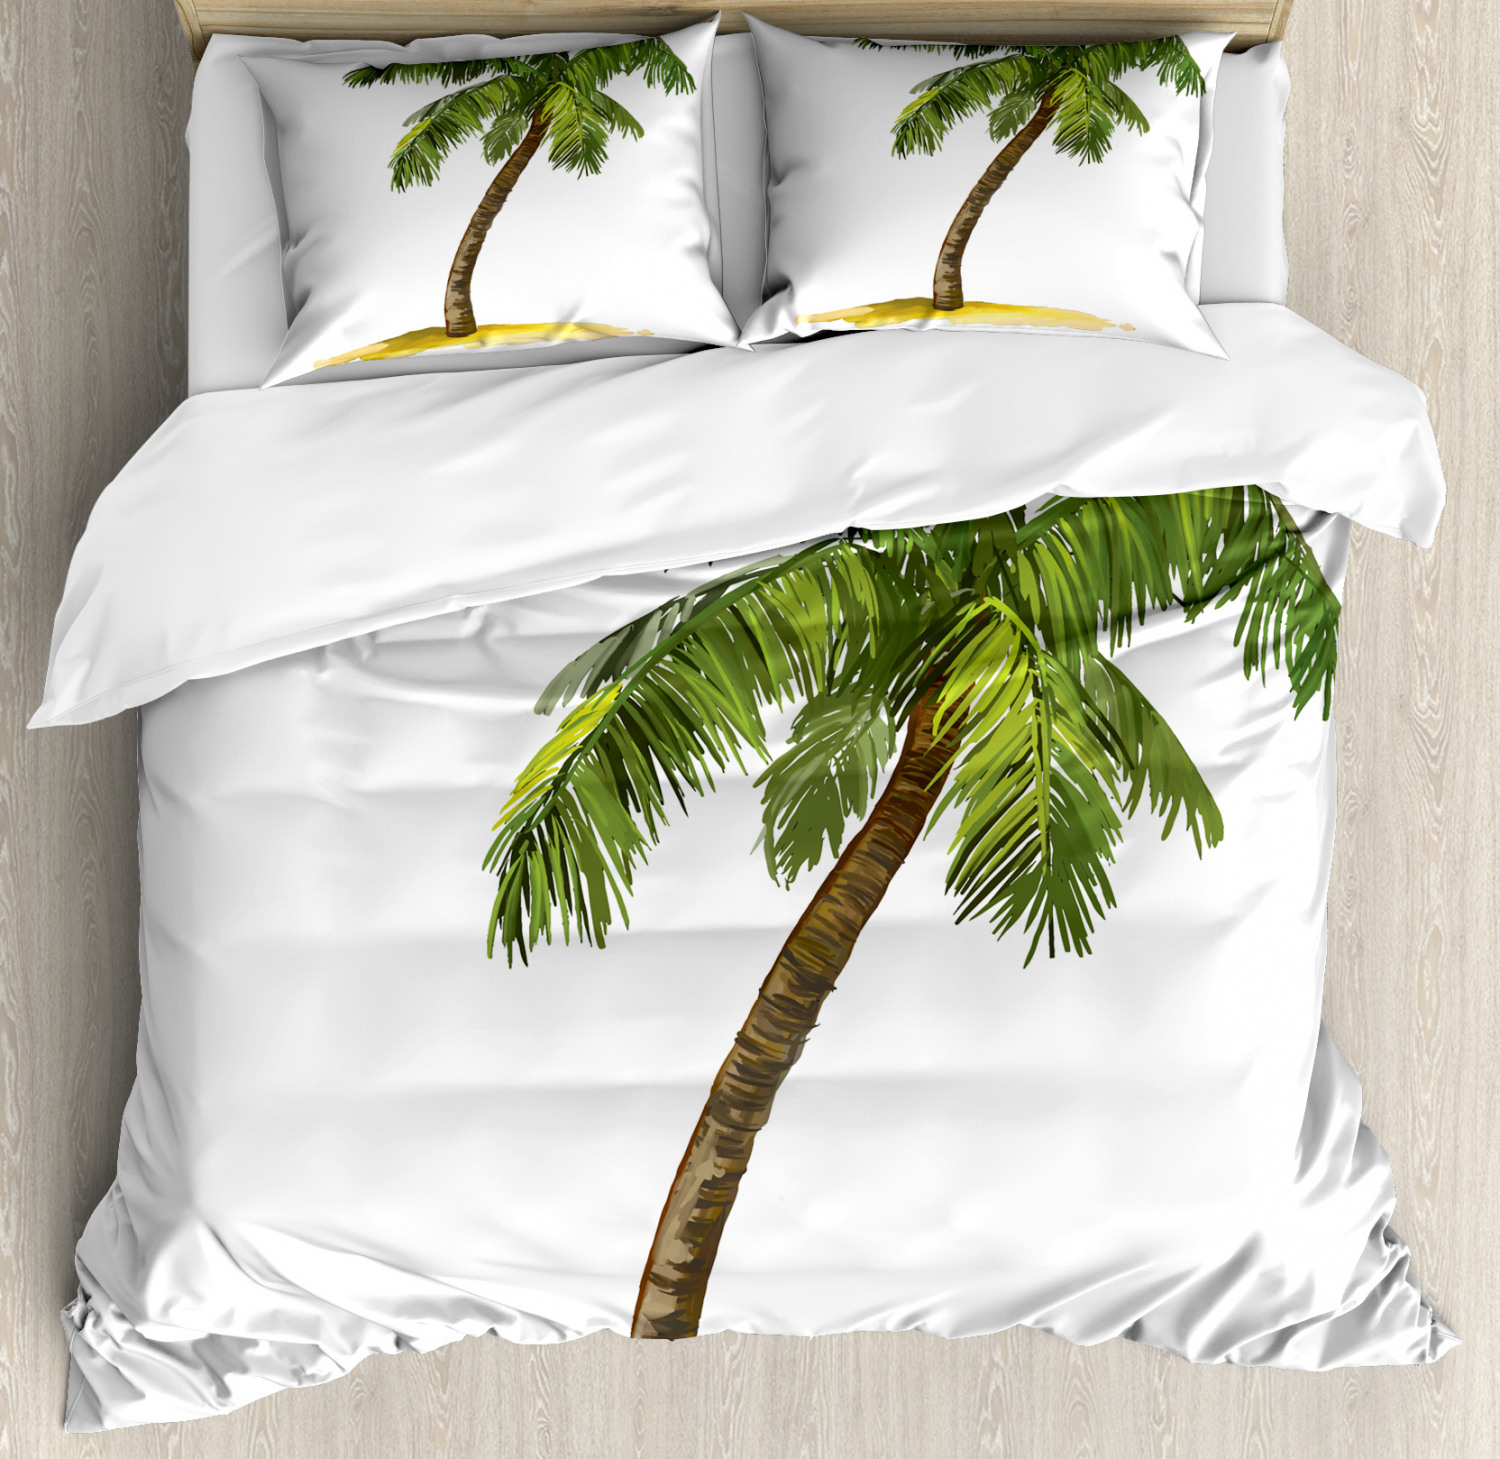 Tropical Duvet Cover Set With Pillow Shams Cartoon Palm Trees